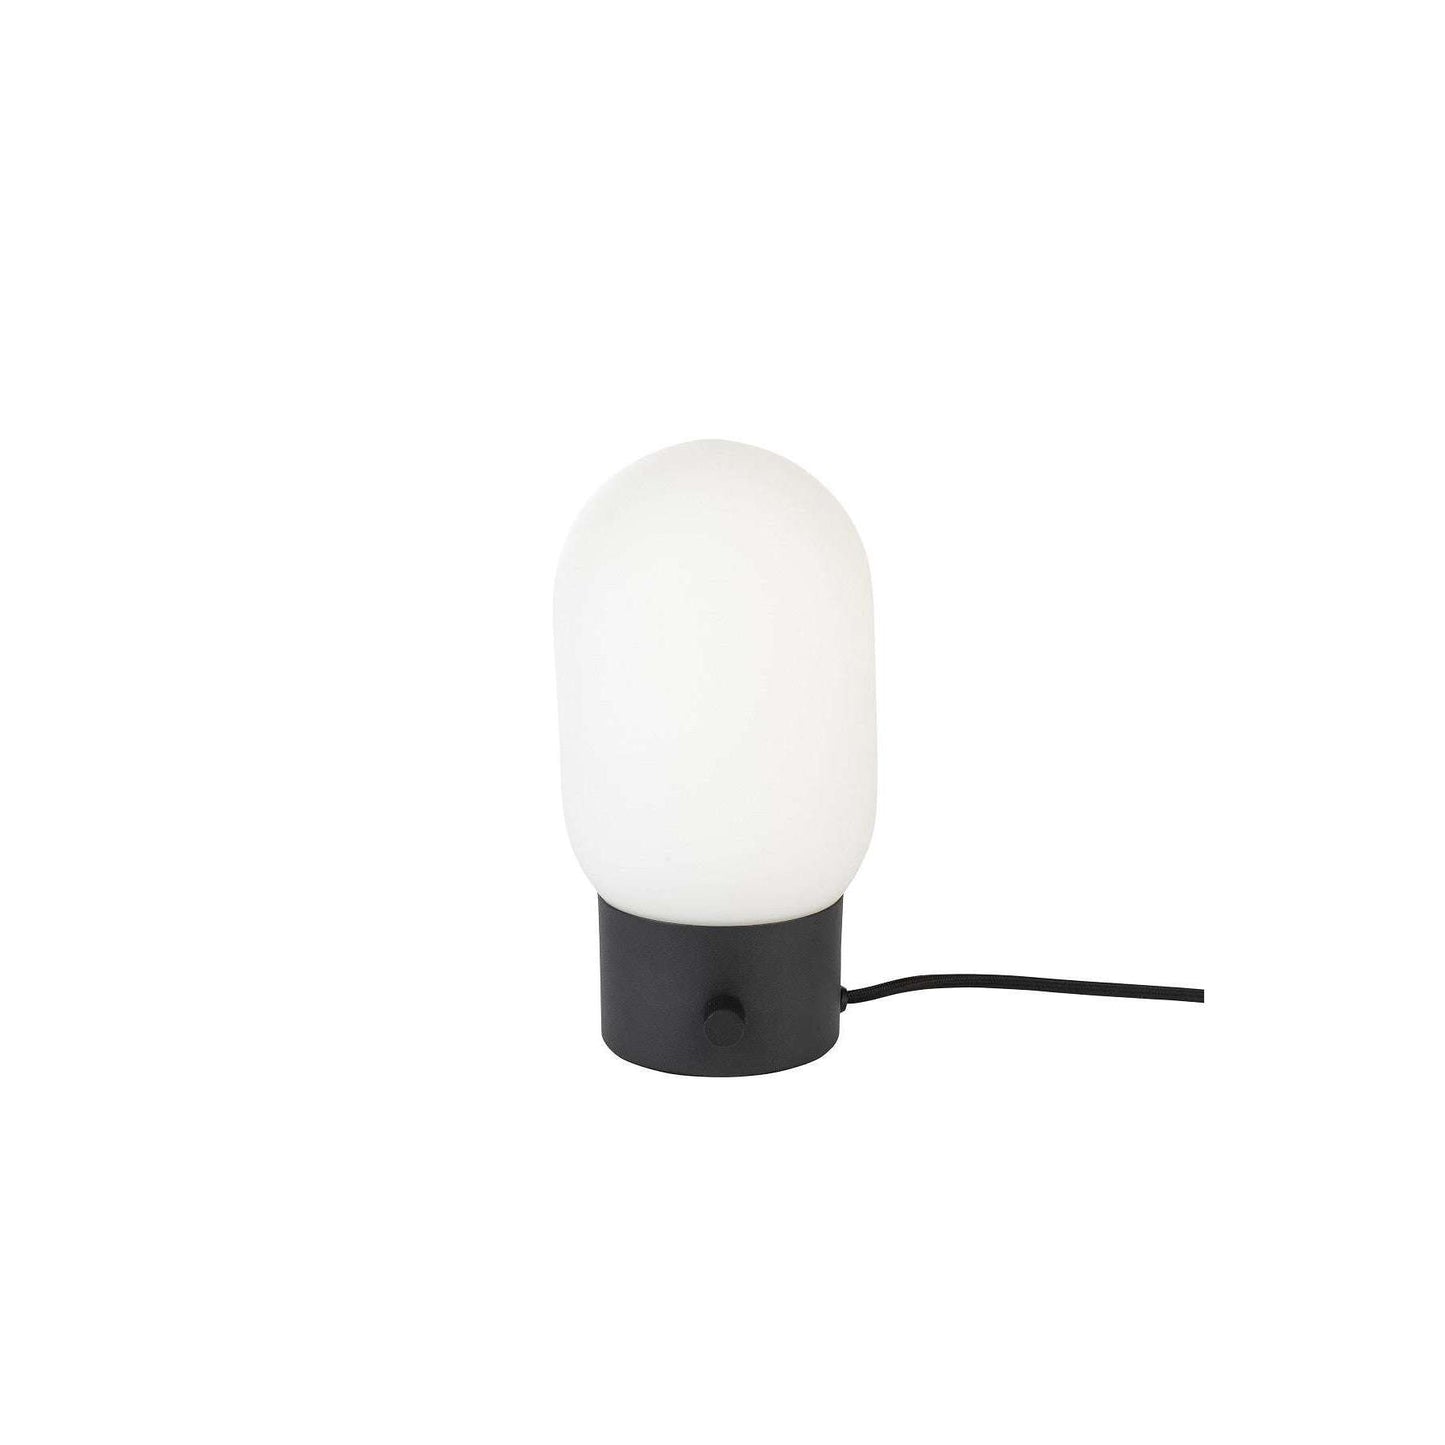 Zuiver tafellamp urban charger zwart Ø12,5 x  24,5 cm